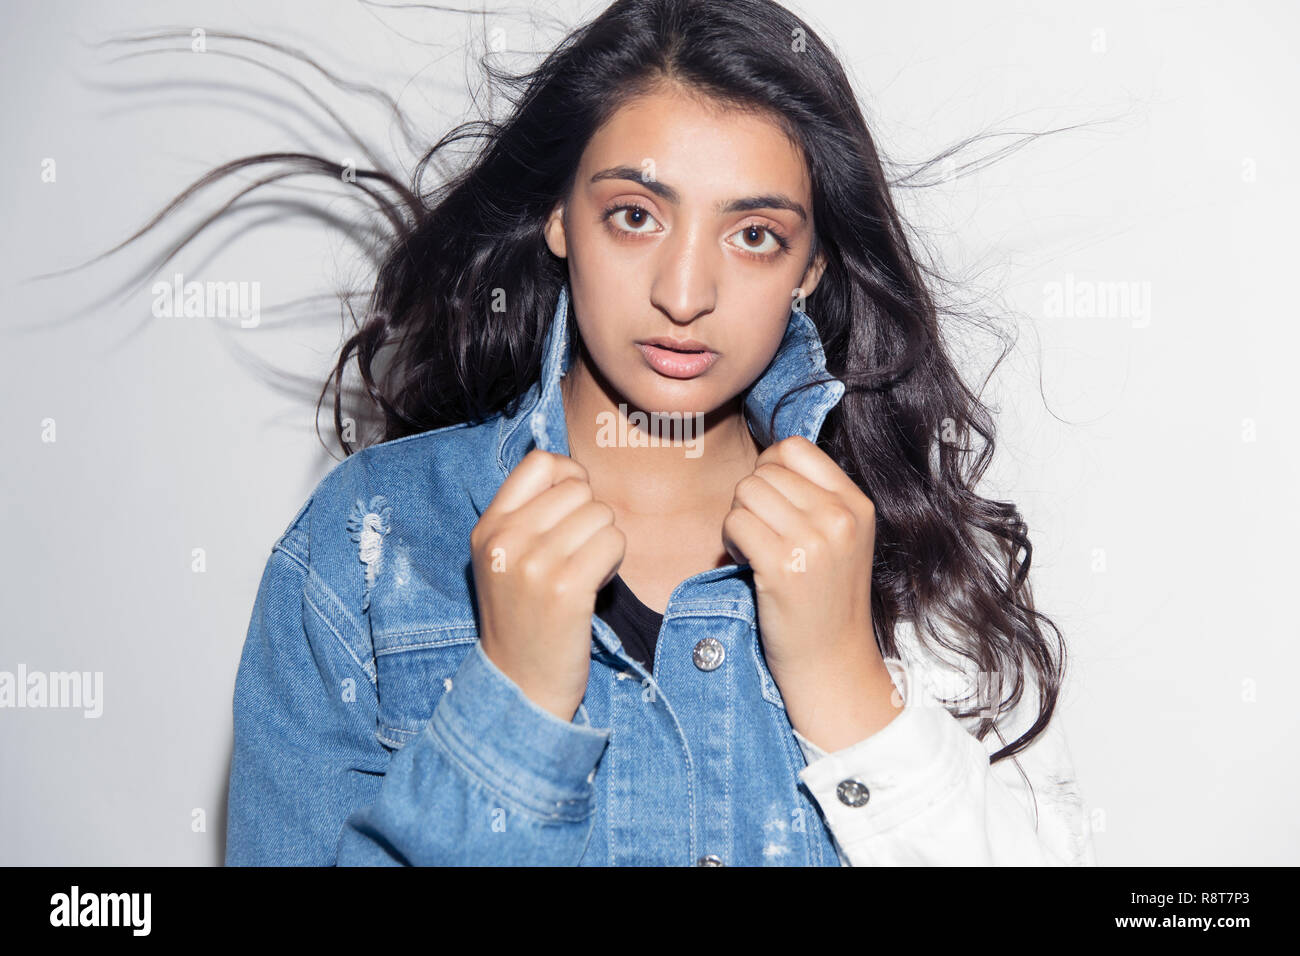 Portrait confident, cool teenage girl in denim jacket Stock Photo